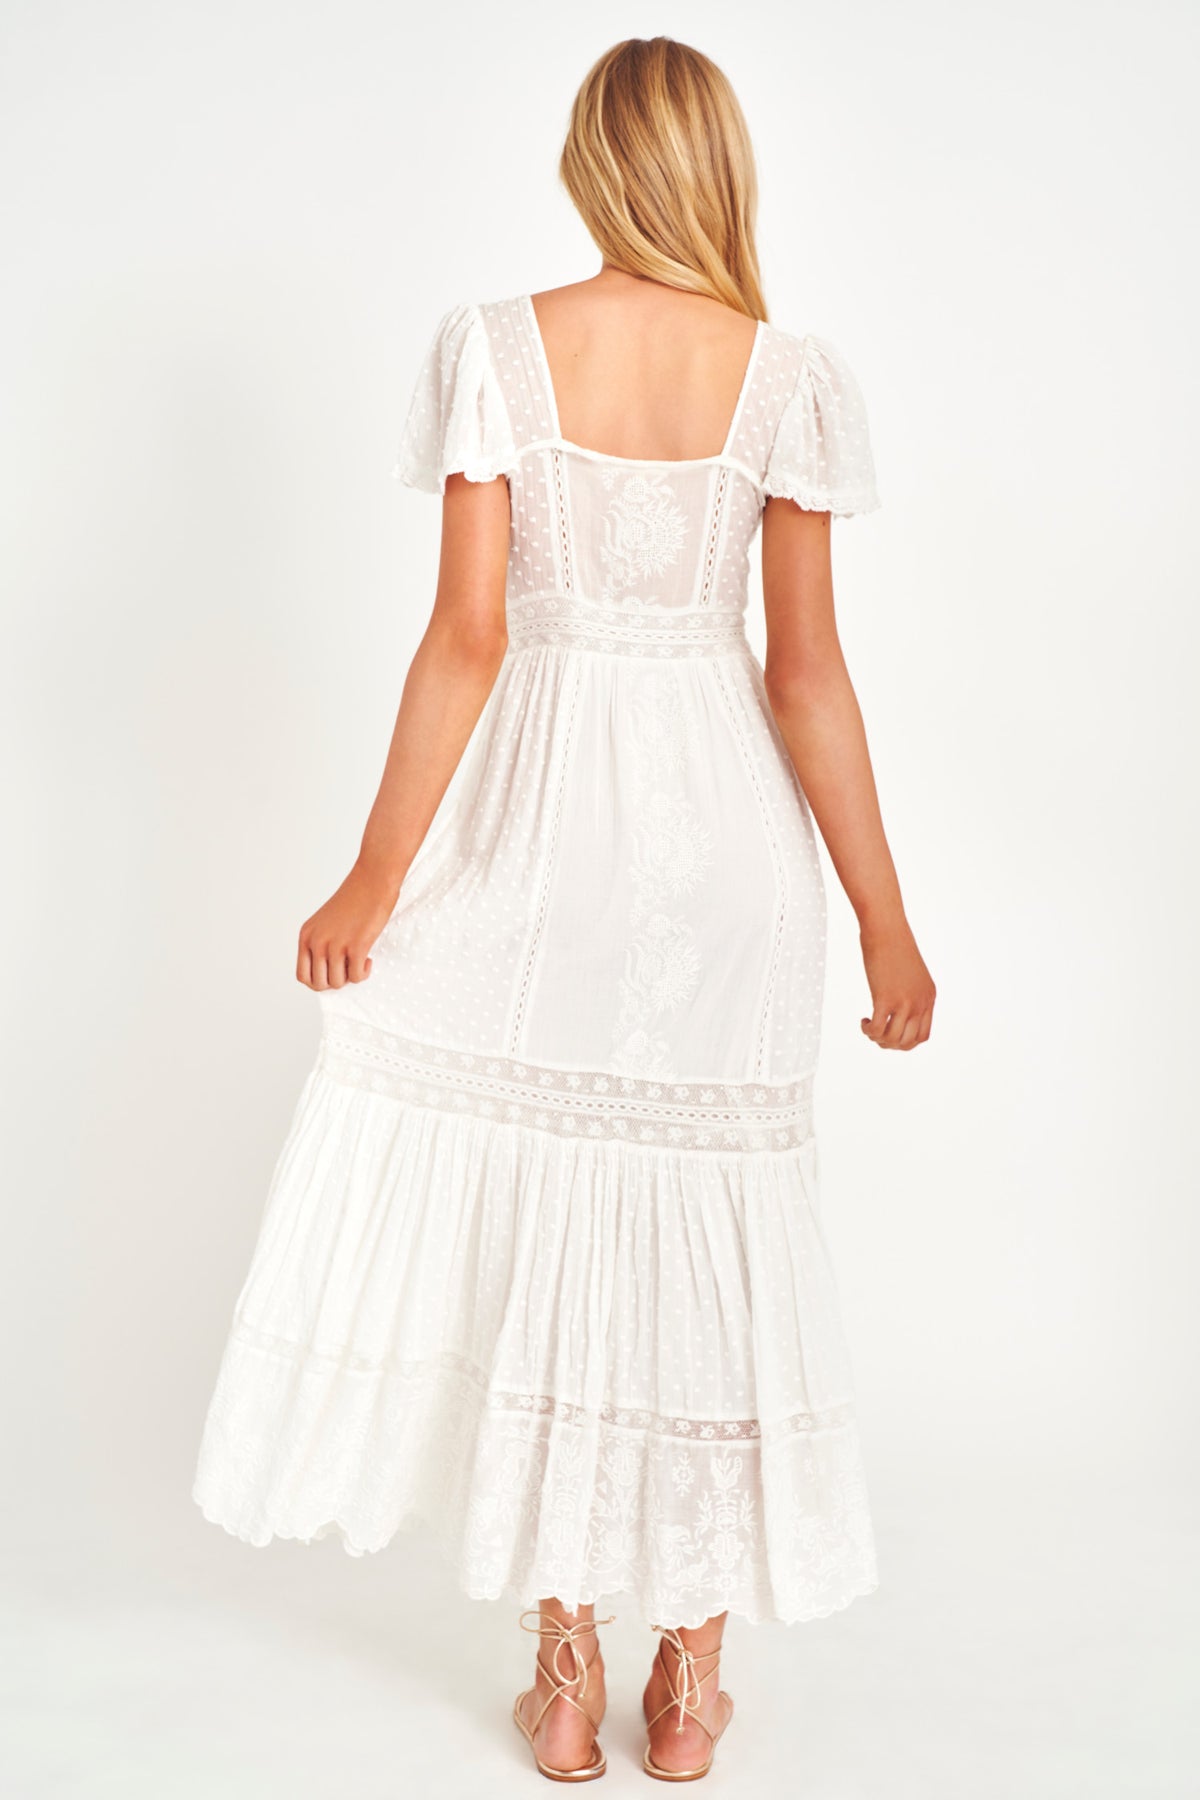 Norma White Midi Dress - Women's Dresses | Shop LoveShackFancy.com